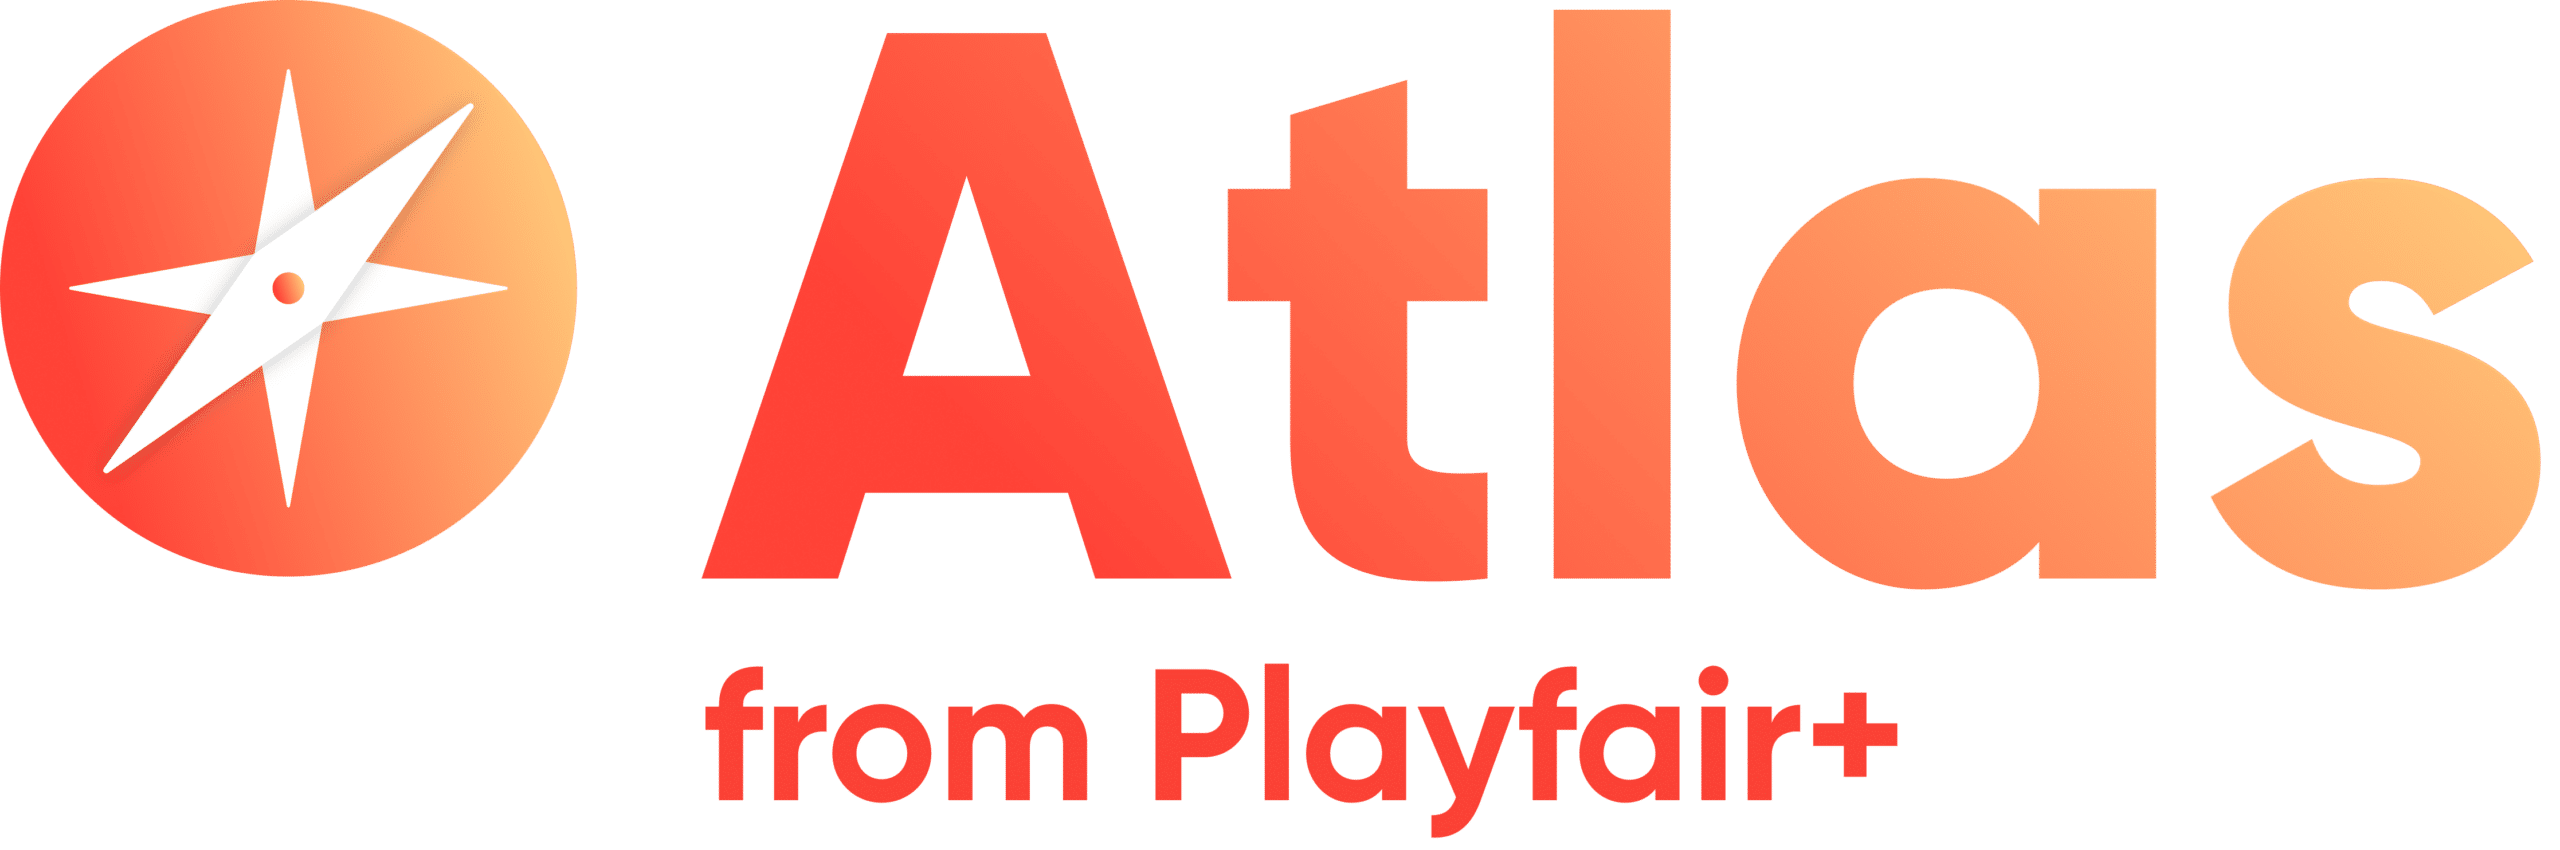 Atlas Logo (from Playfair+) (1)